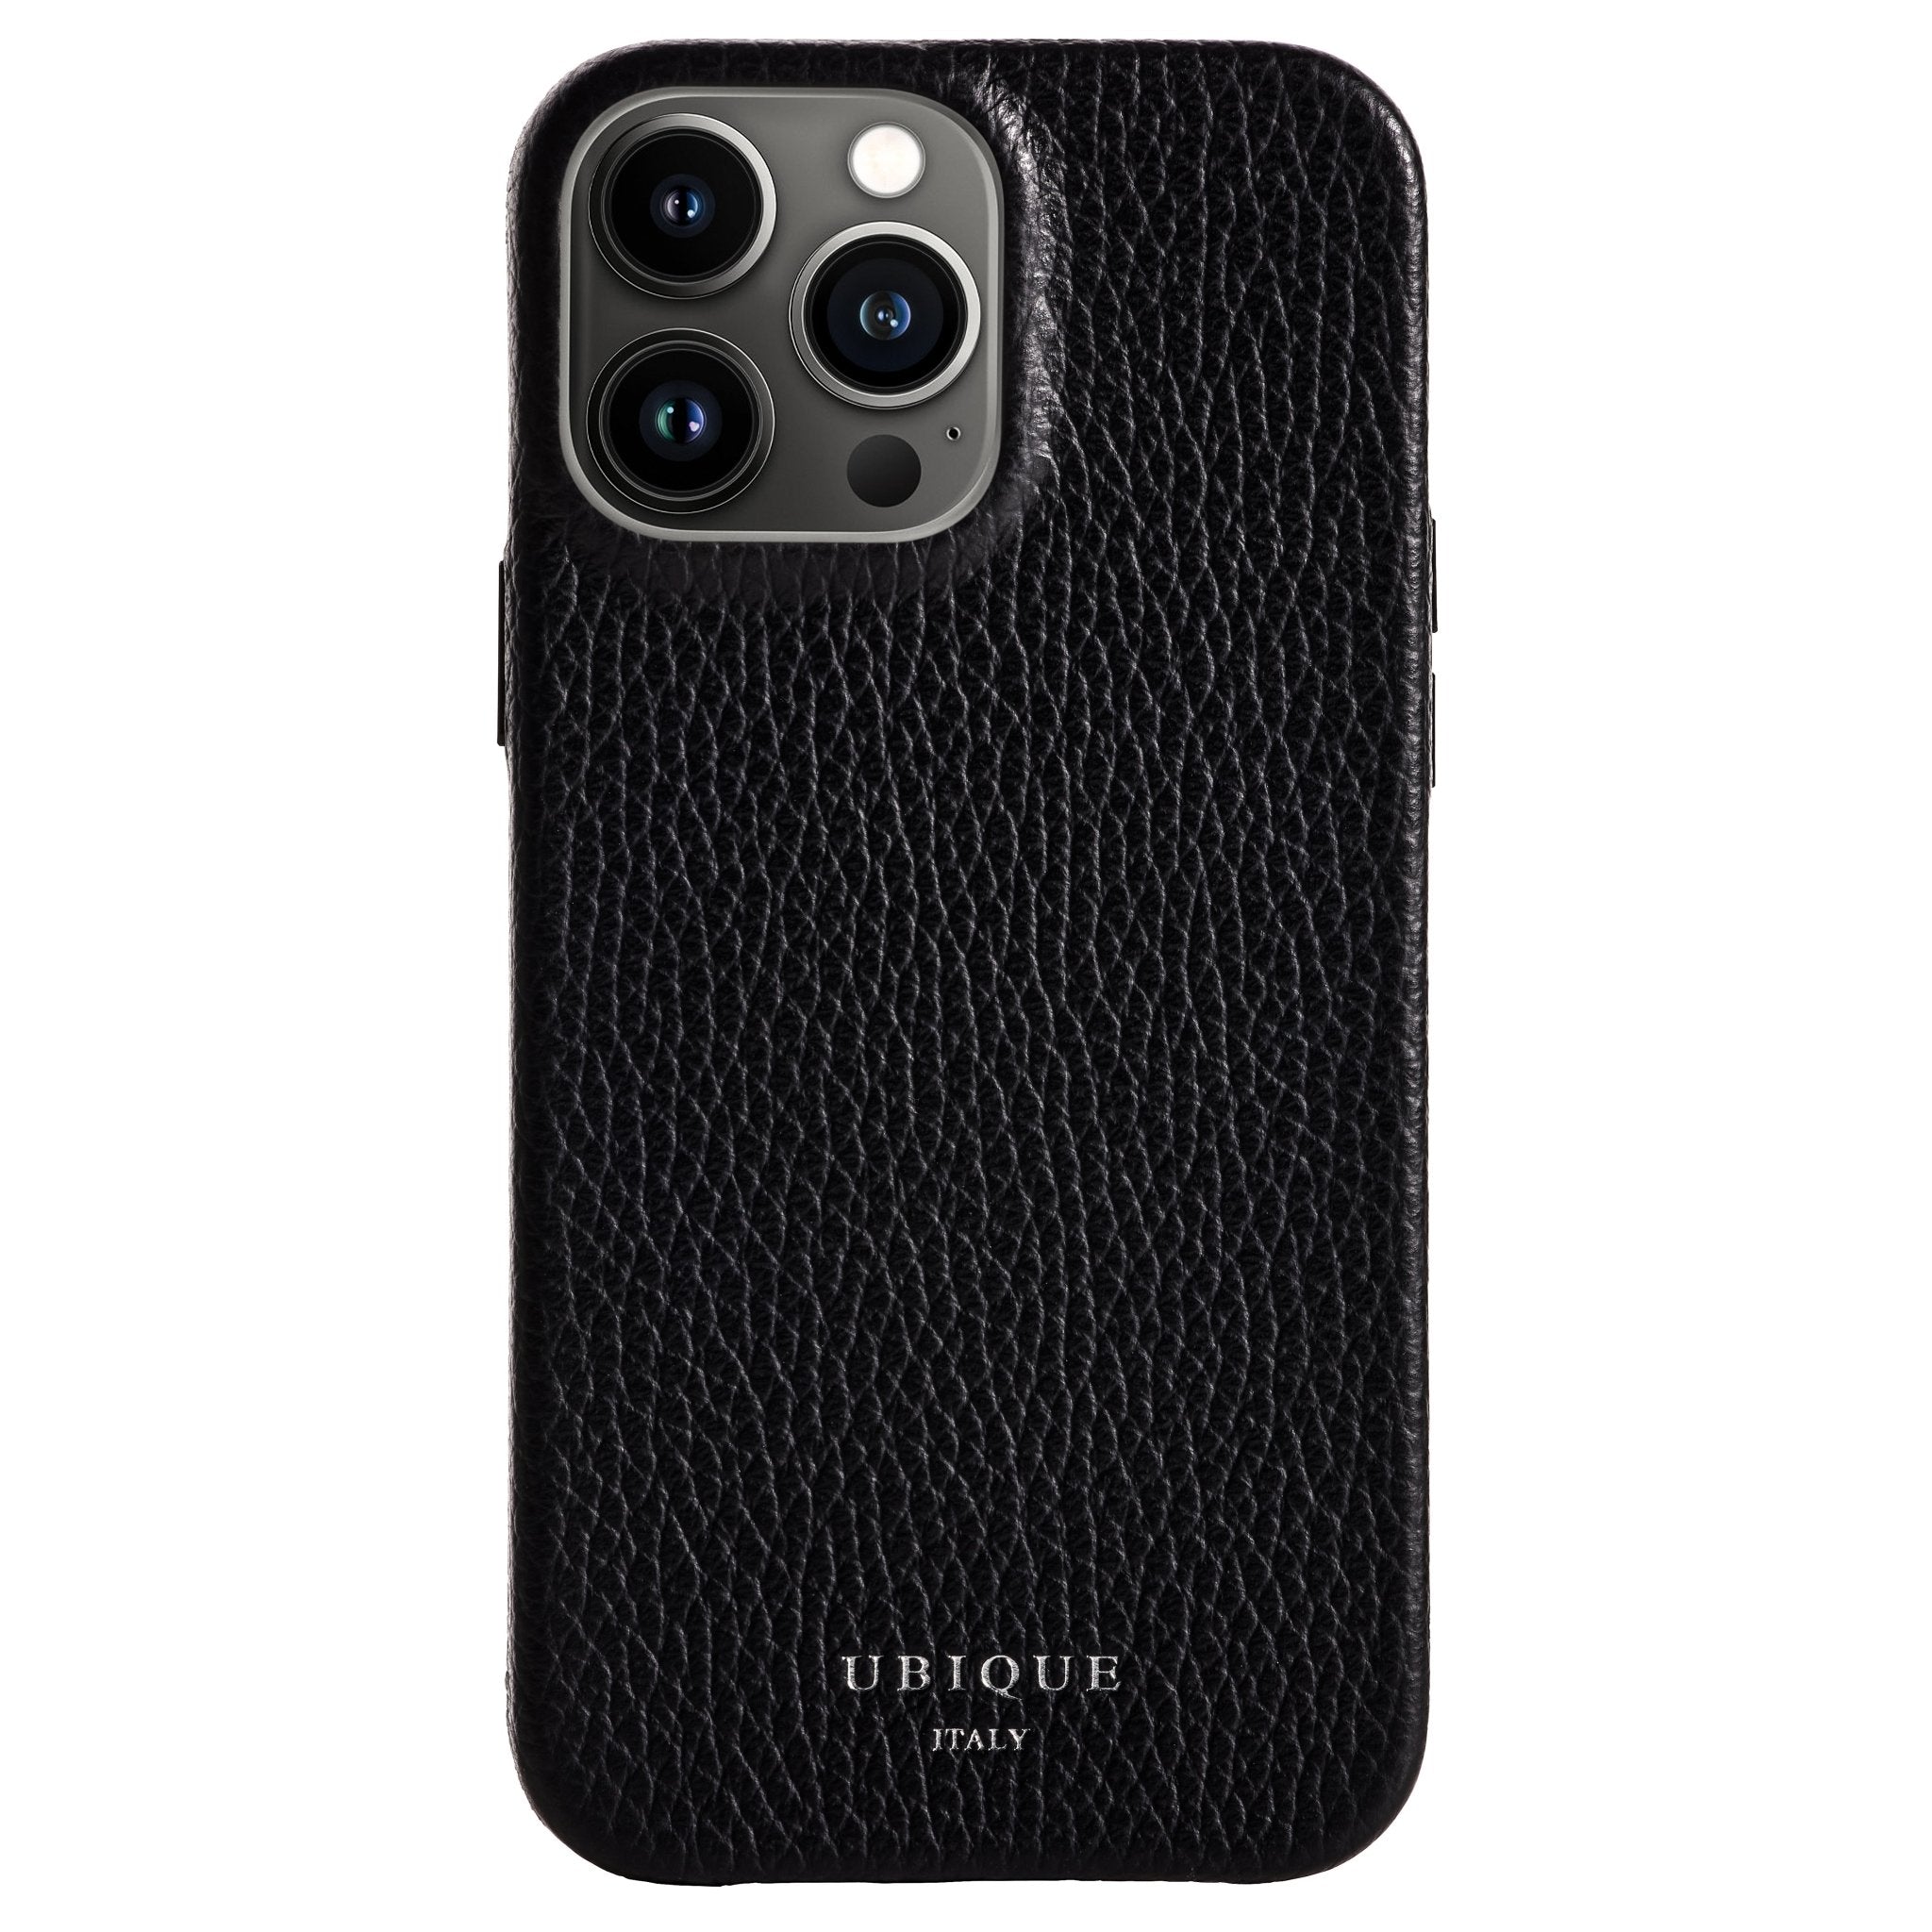 Ubique Italy Luxury iPhone Case 13 Pro Max Pebble Grain Leather Black